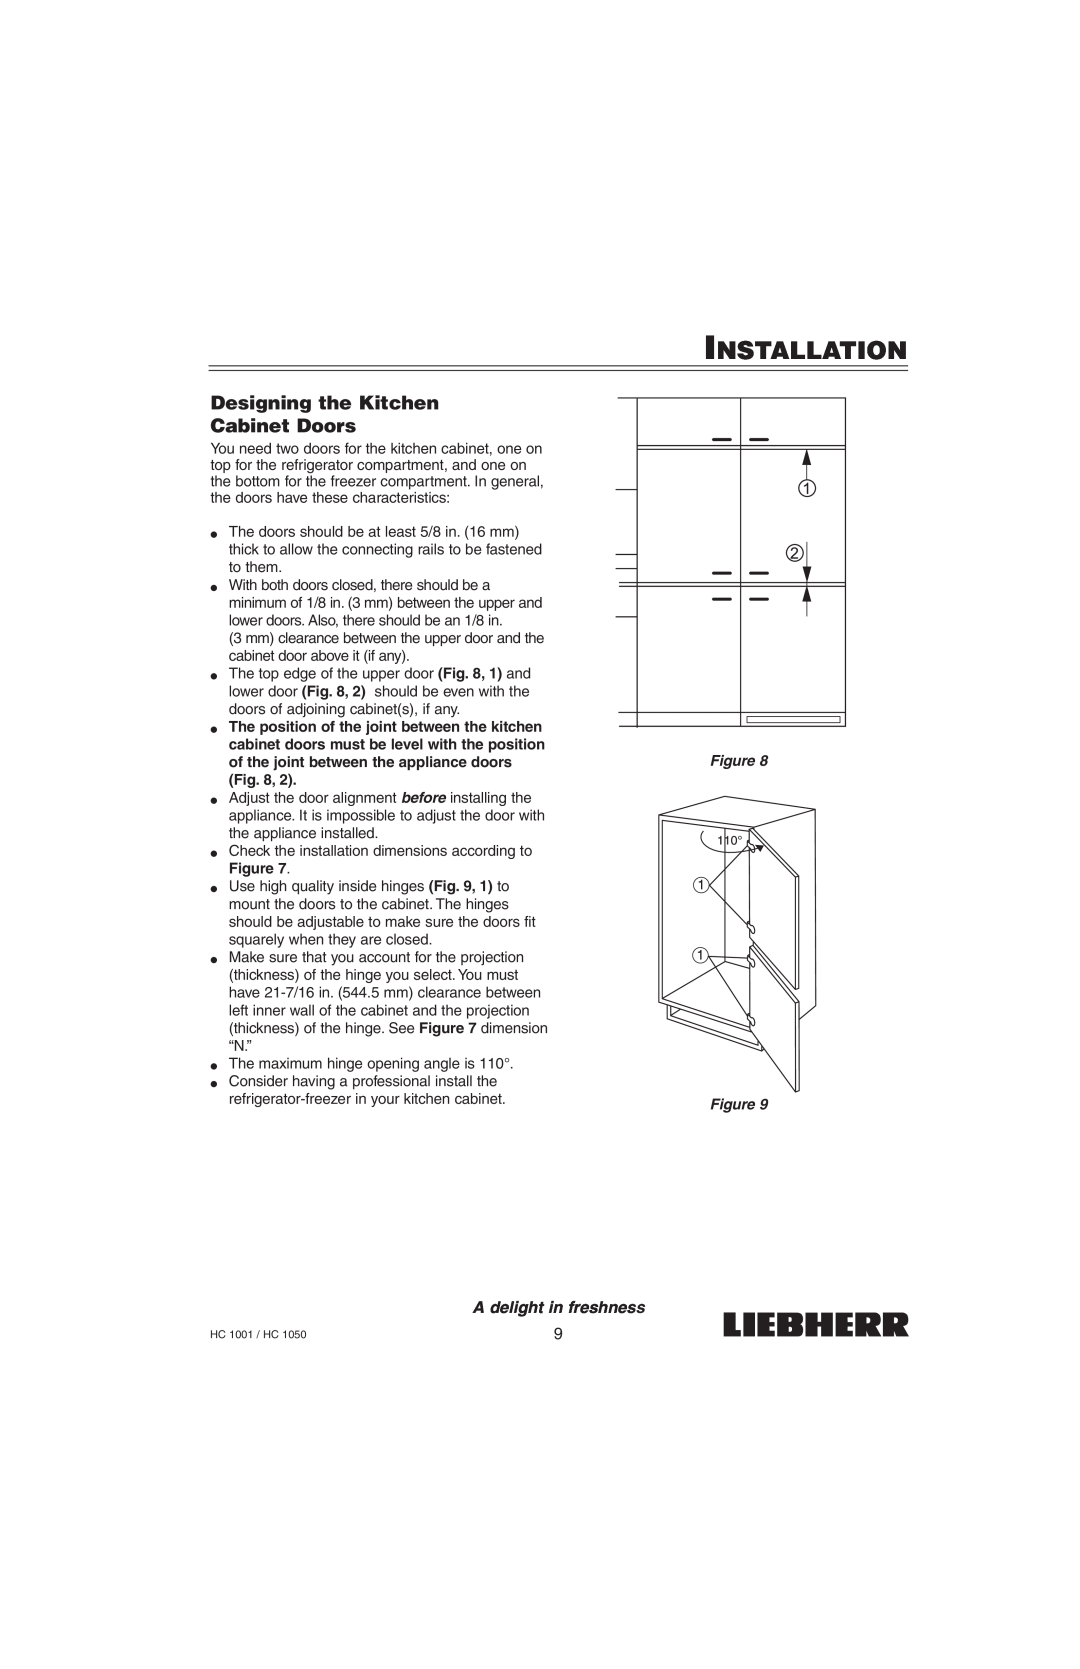 Liebherr HC1050, HC1001 installation manual Designing the Kitchen Cabinet Doors, Installation, A delight in freshness 